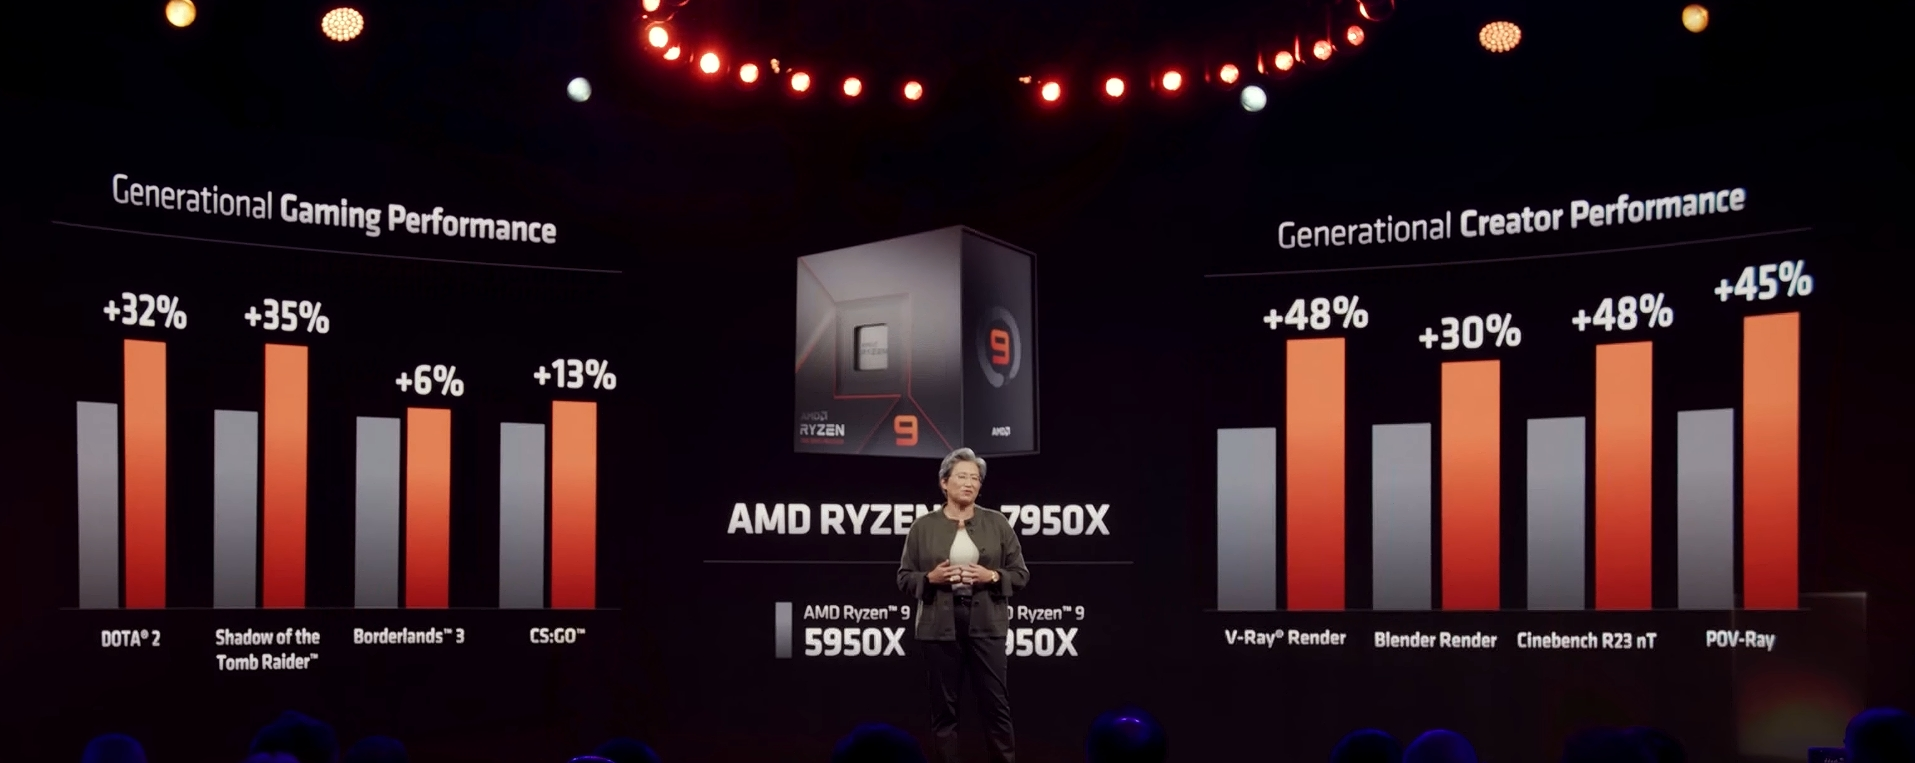 AMD Zen4 Ryzen 7000, Performance Improvement compared to the previous generation